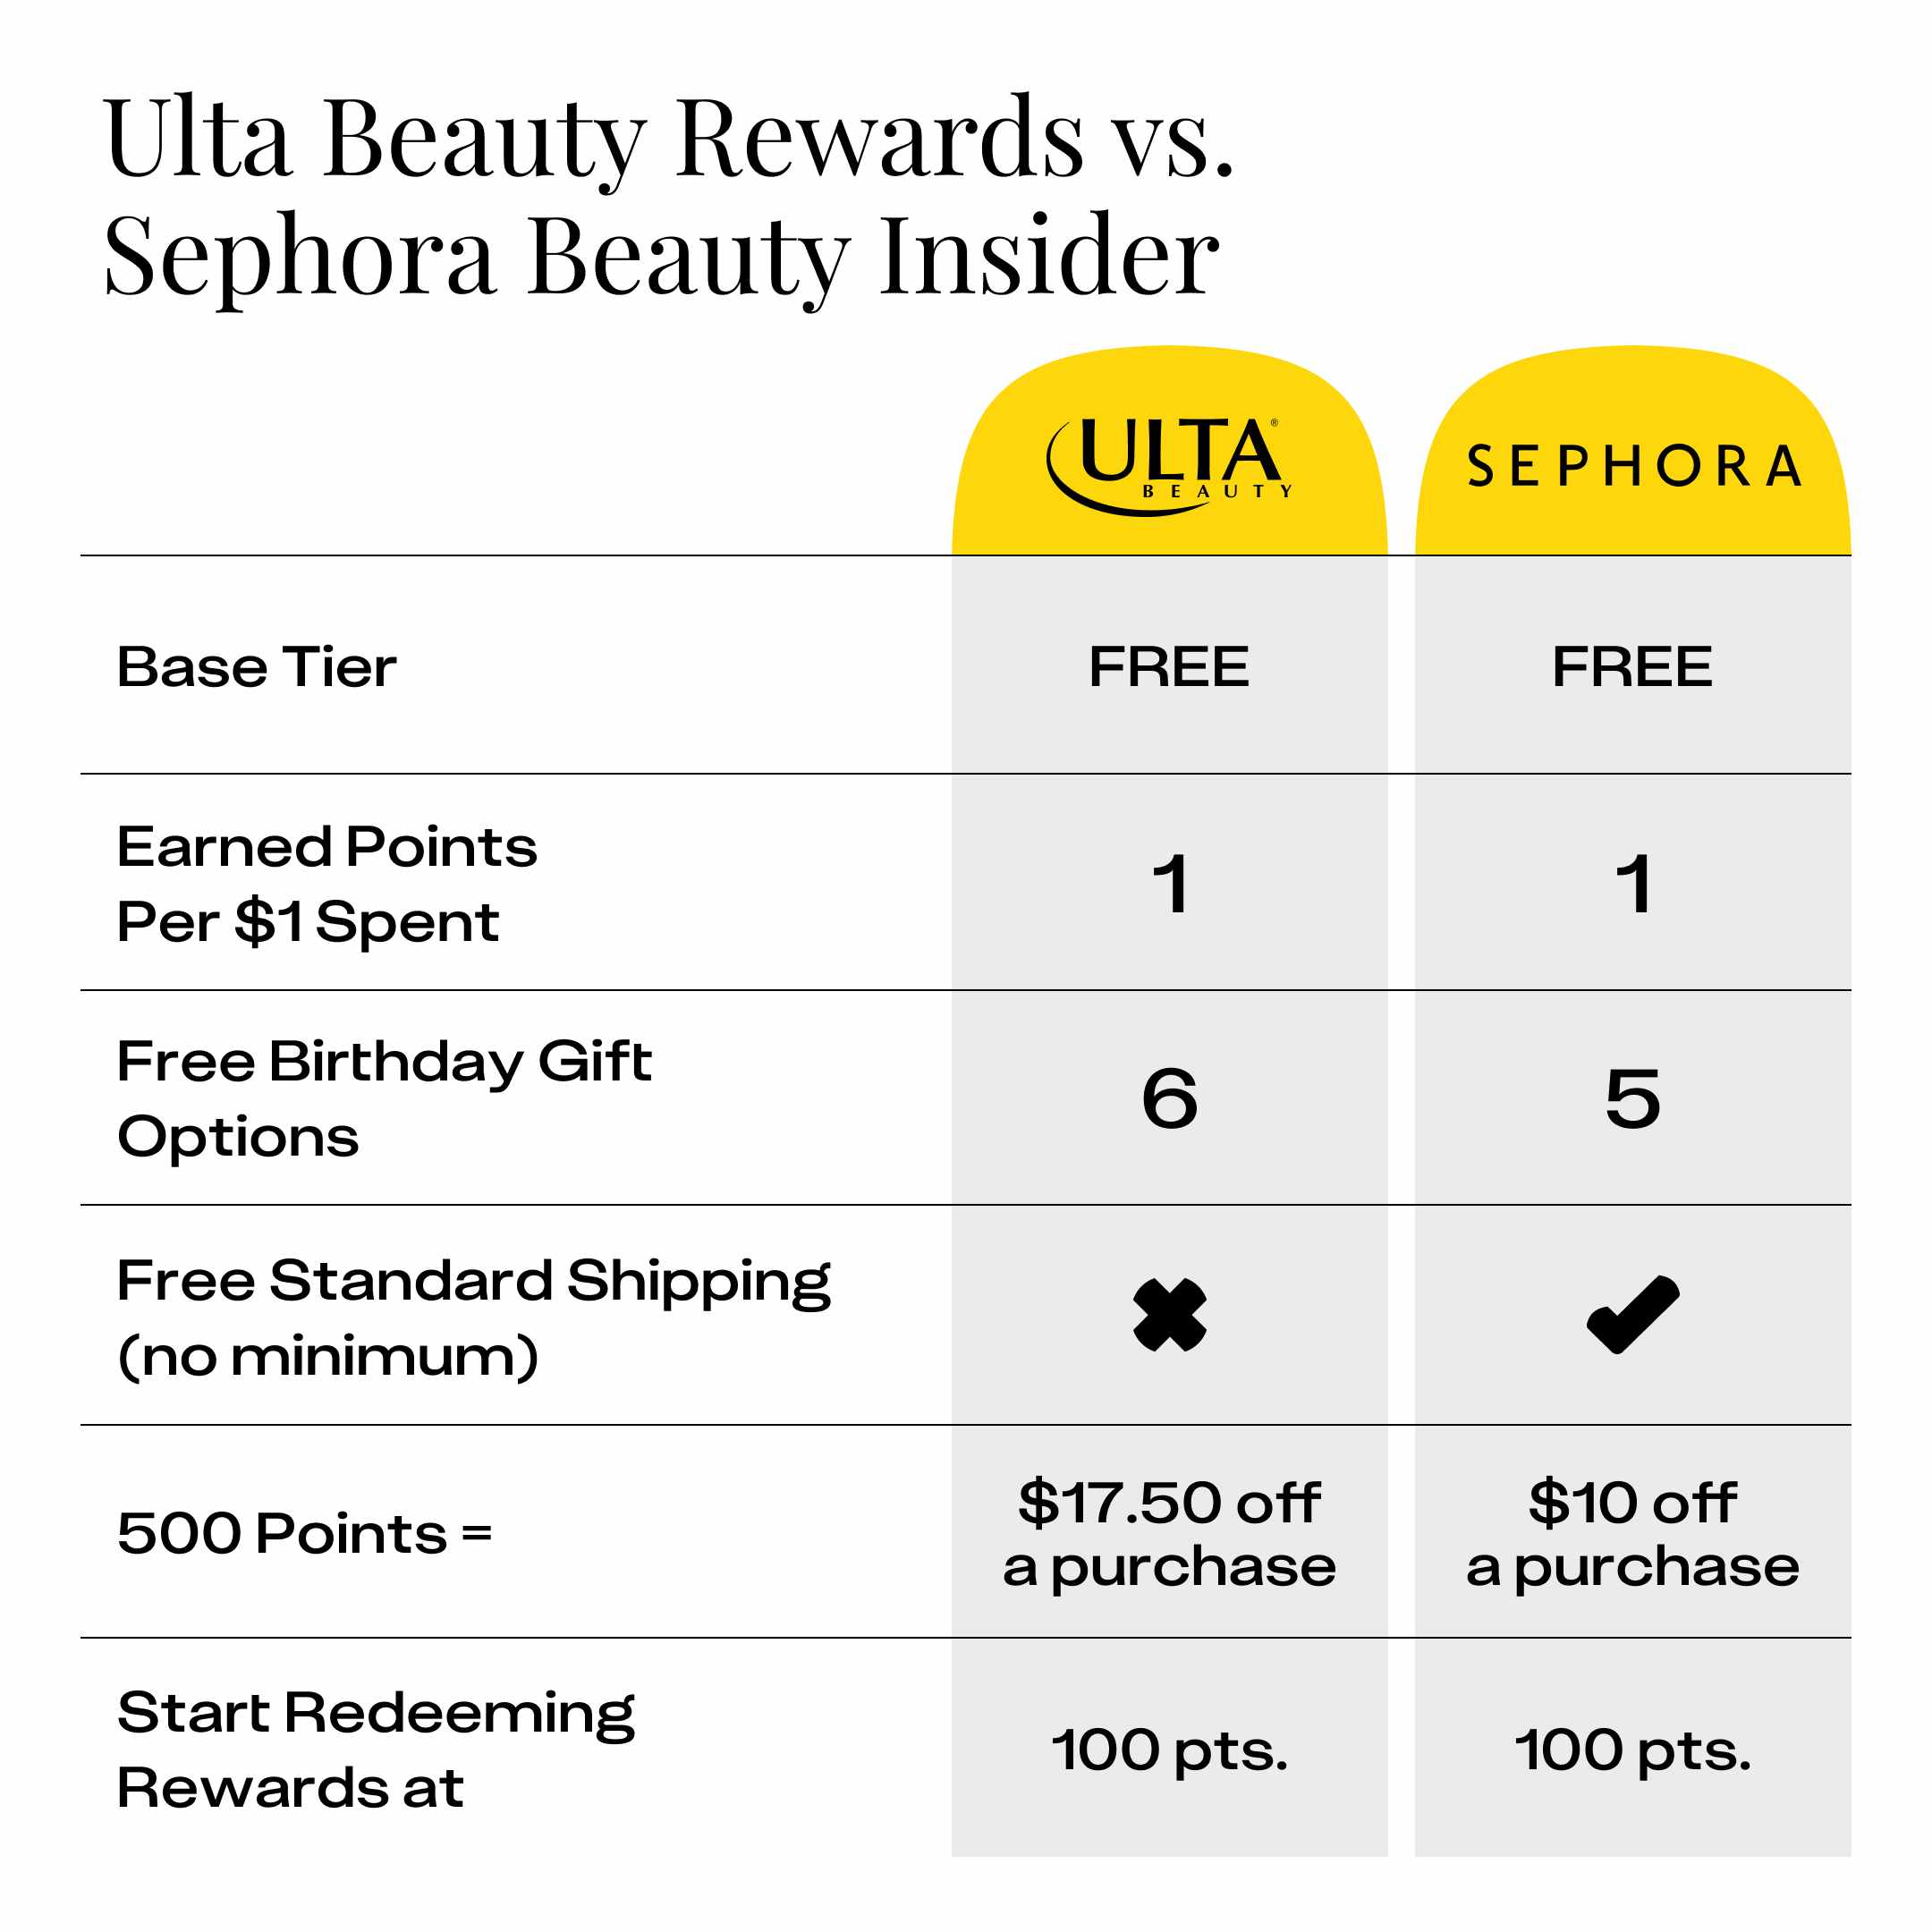 Ulta Beauty Rewards vs. Sephora Beauty Insider